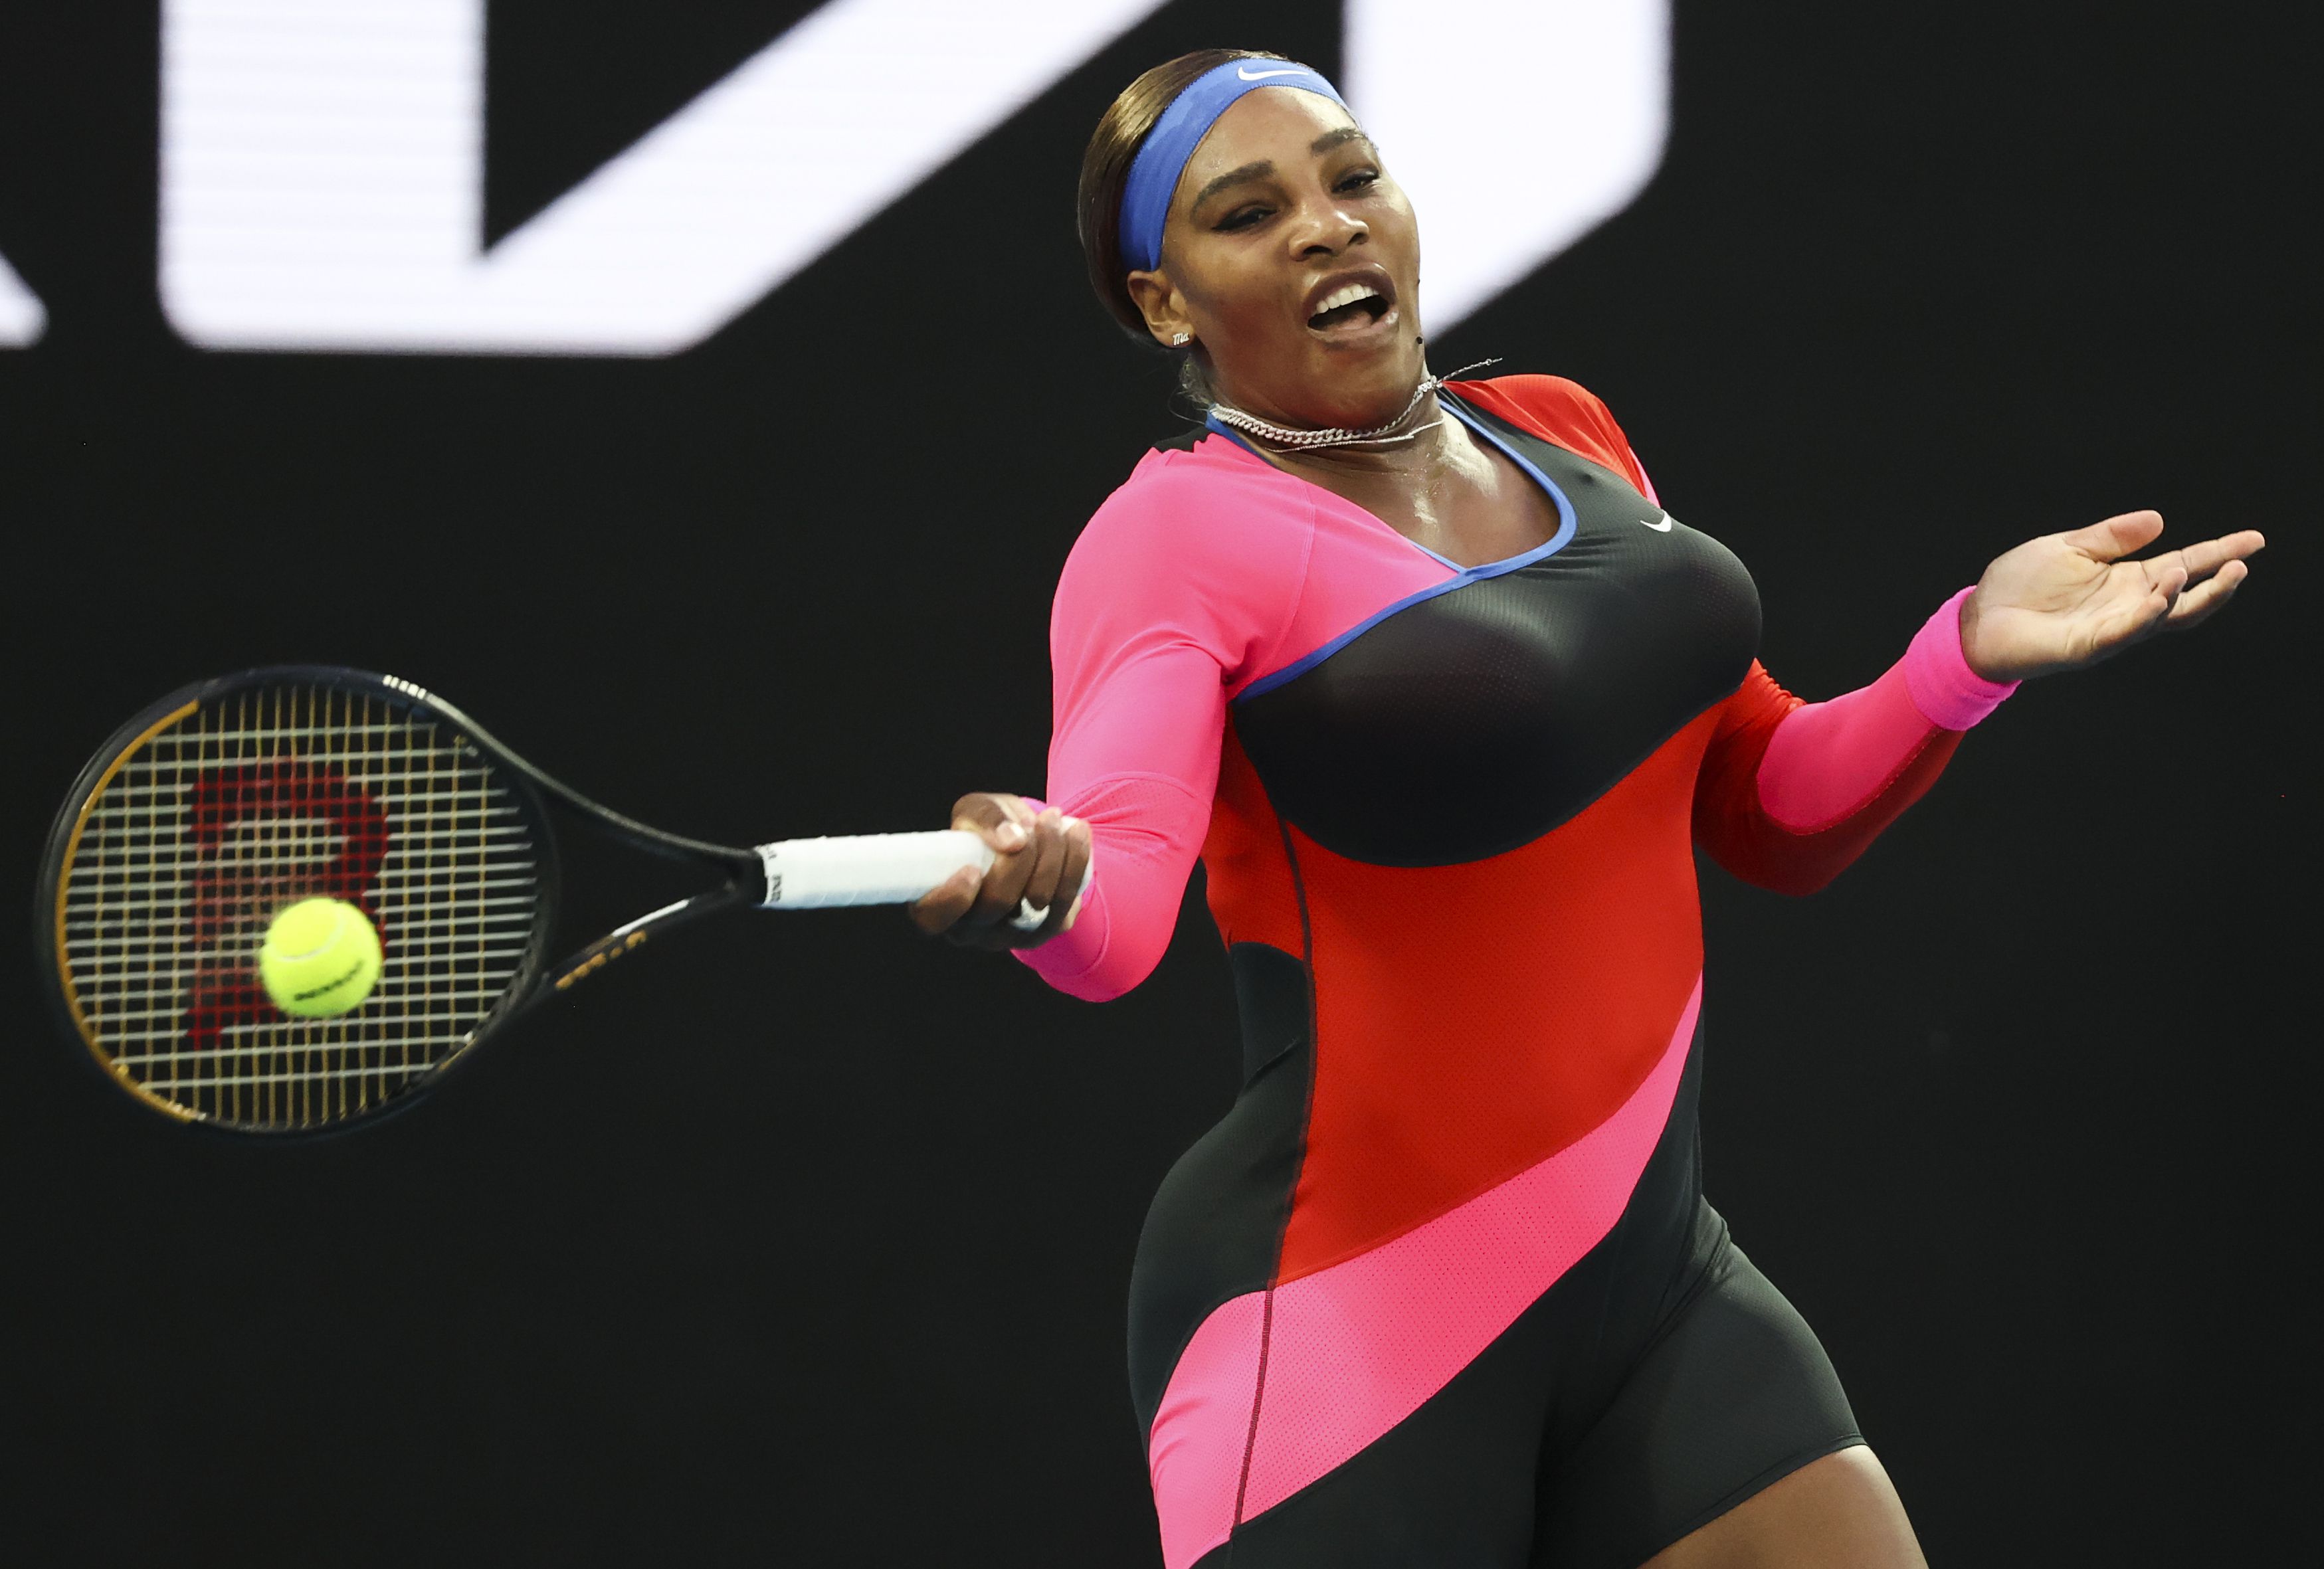 Australian Open 2021 Semifinals FREE LIVE STREAMS | Watch Serena Williams vs. Naomi Osaka, Novak Djokovic, | Time, TV, channel - nj.com